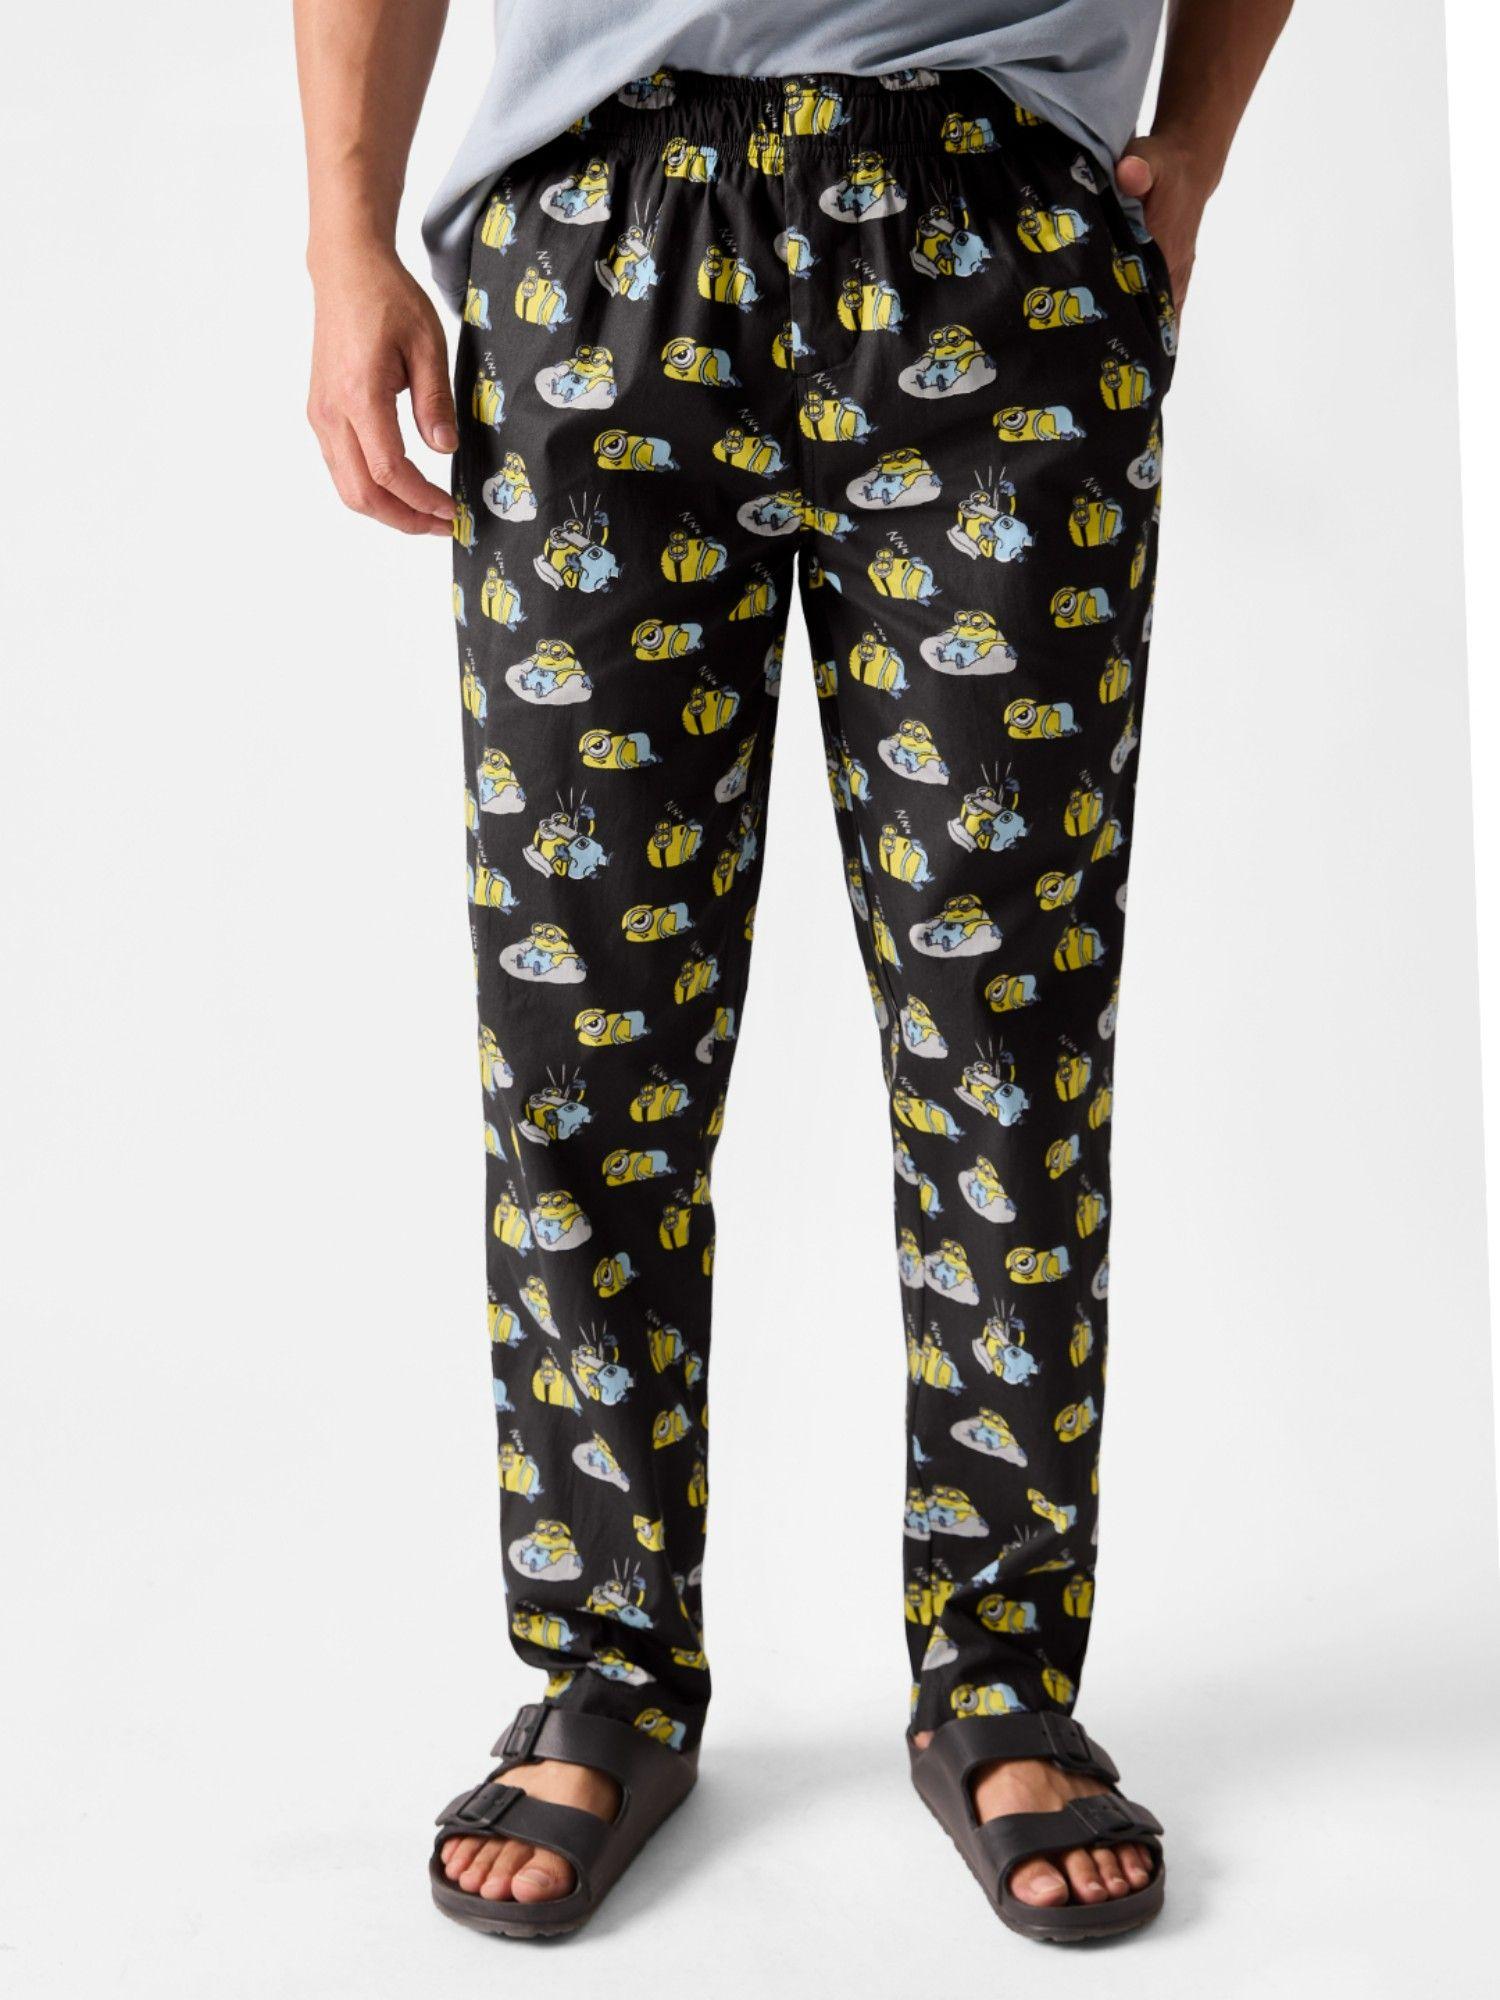 minions:-be-lazy-pajamas-for-mens